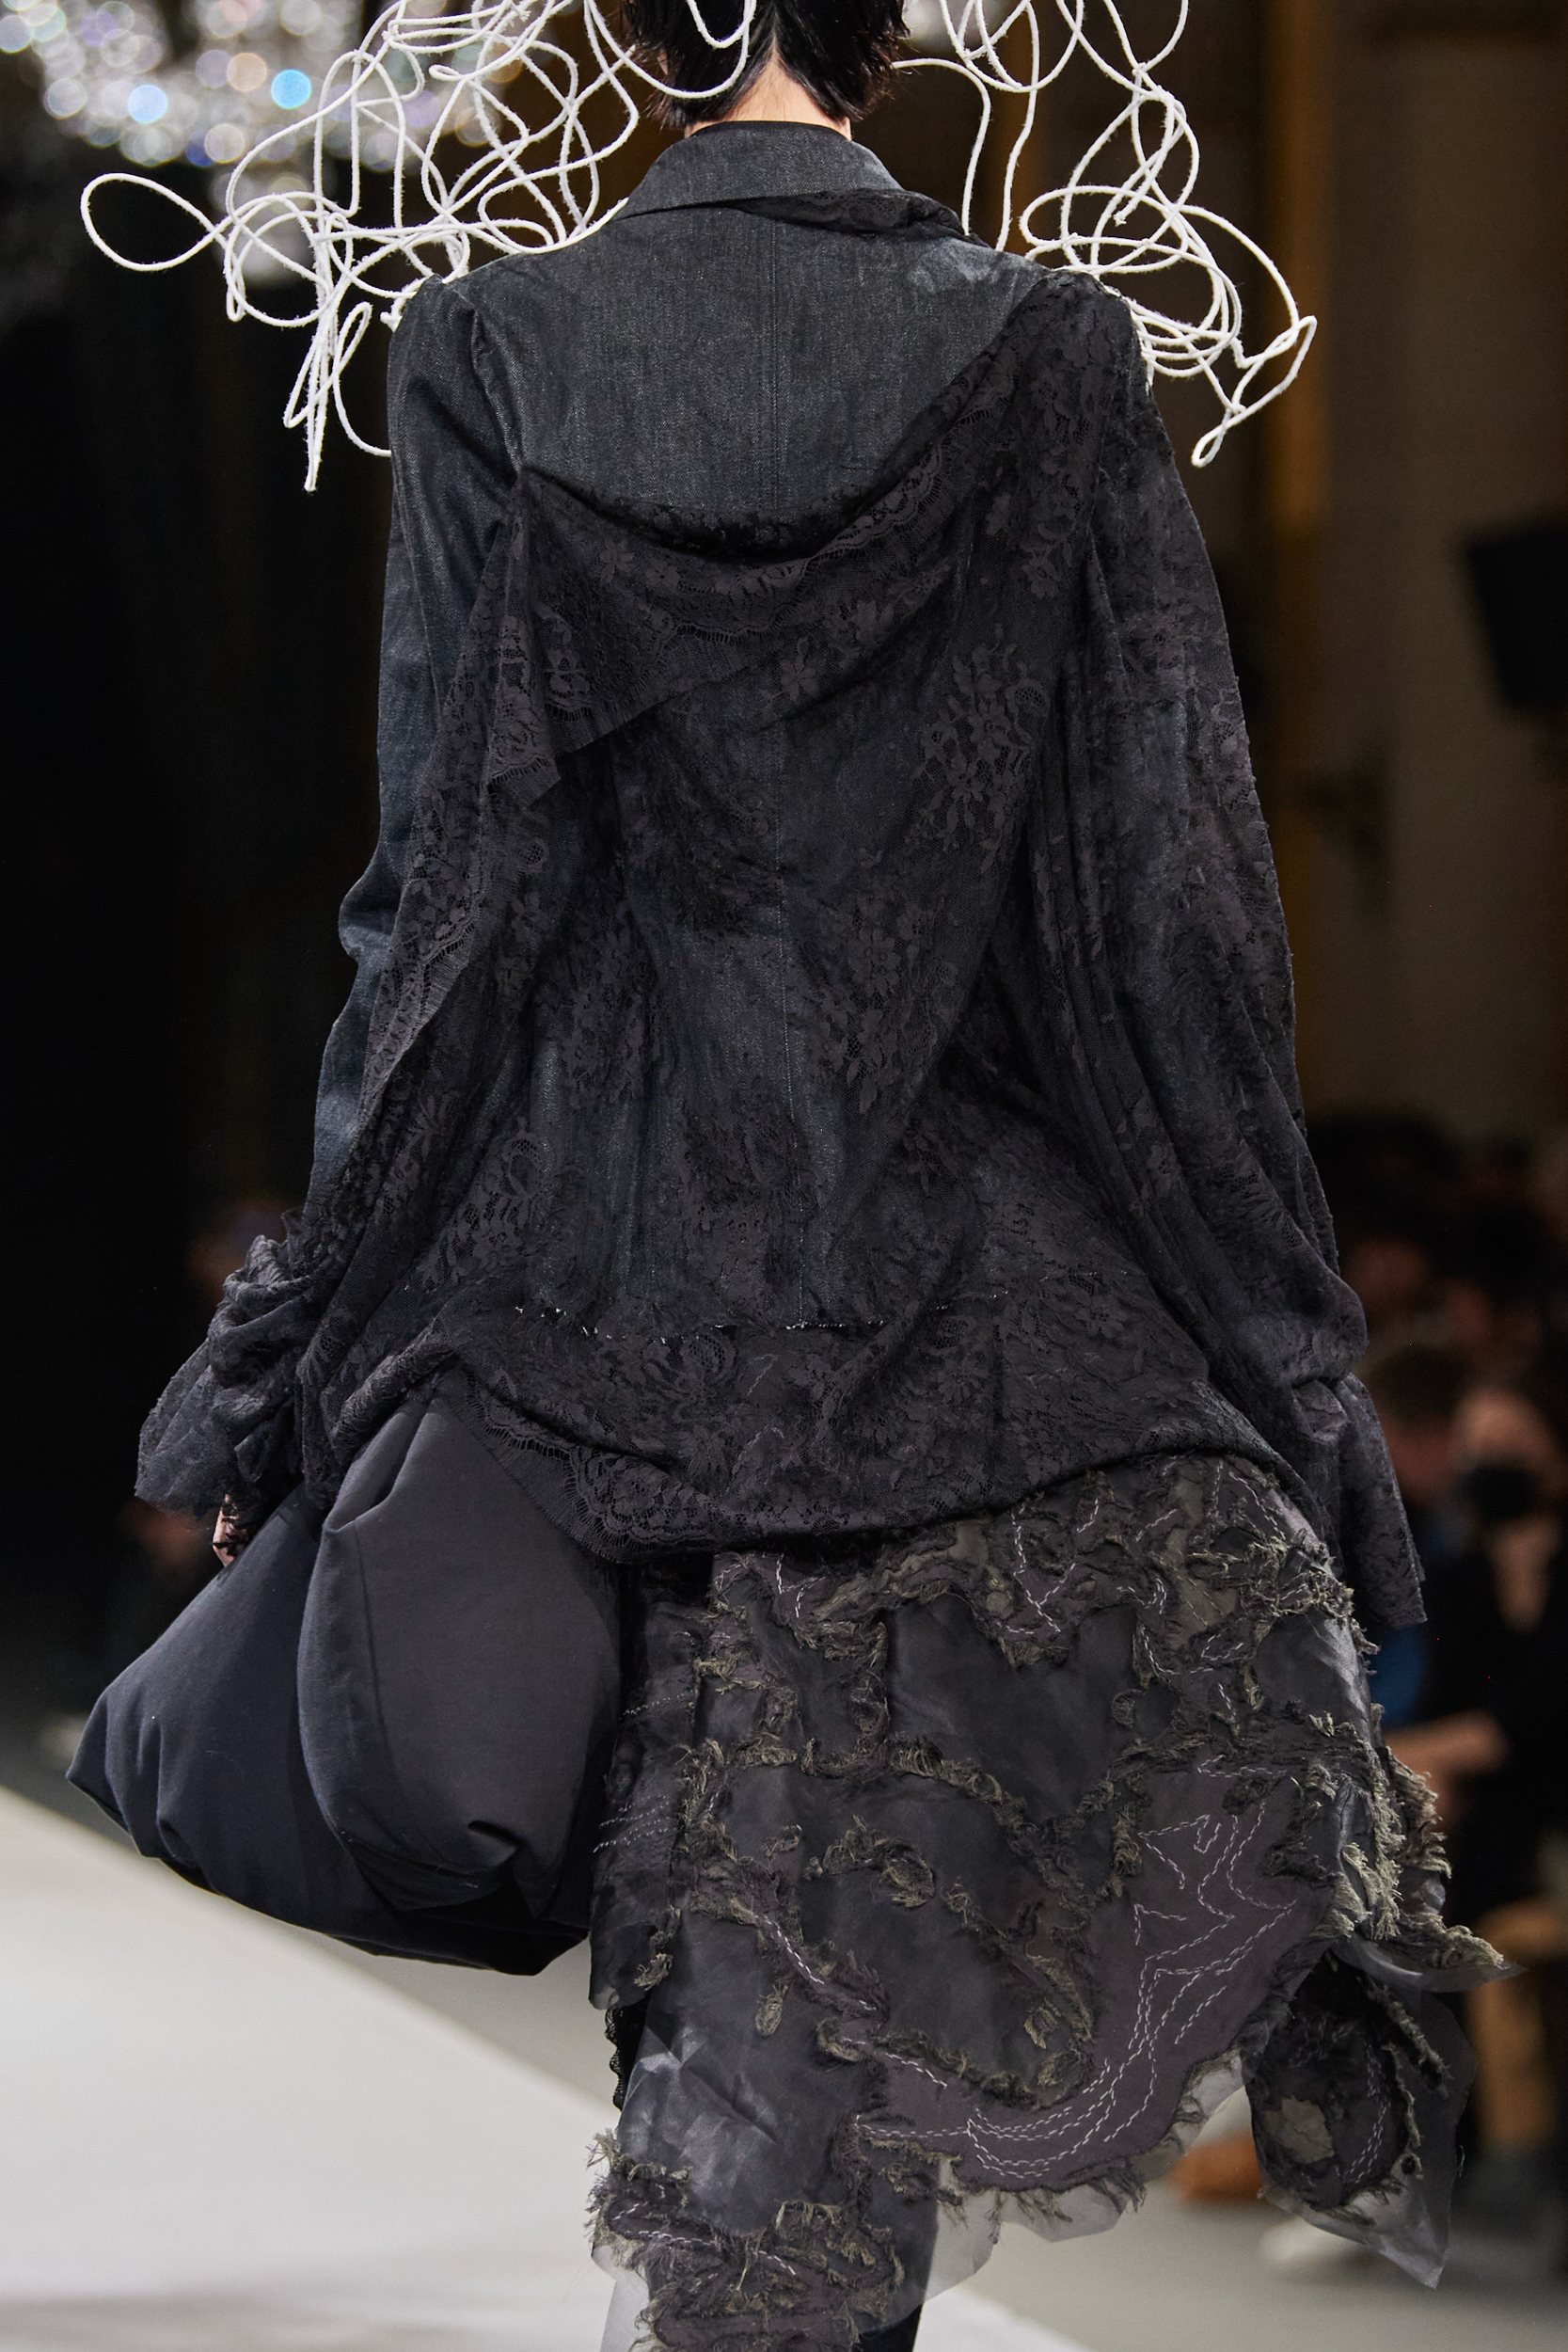 Yohji Yamamoto Fall 2022 Fashion Show Details Fashion Show